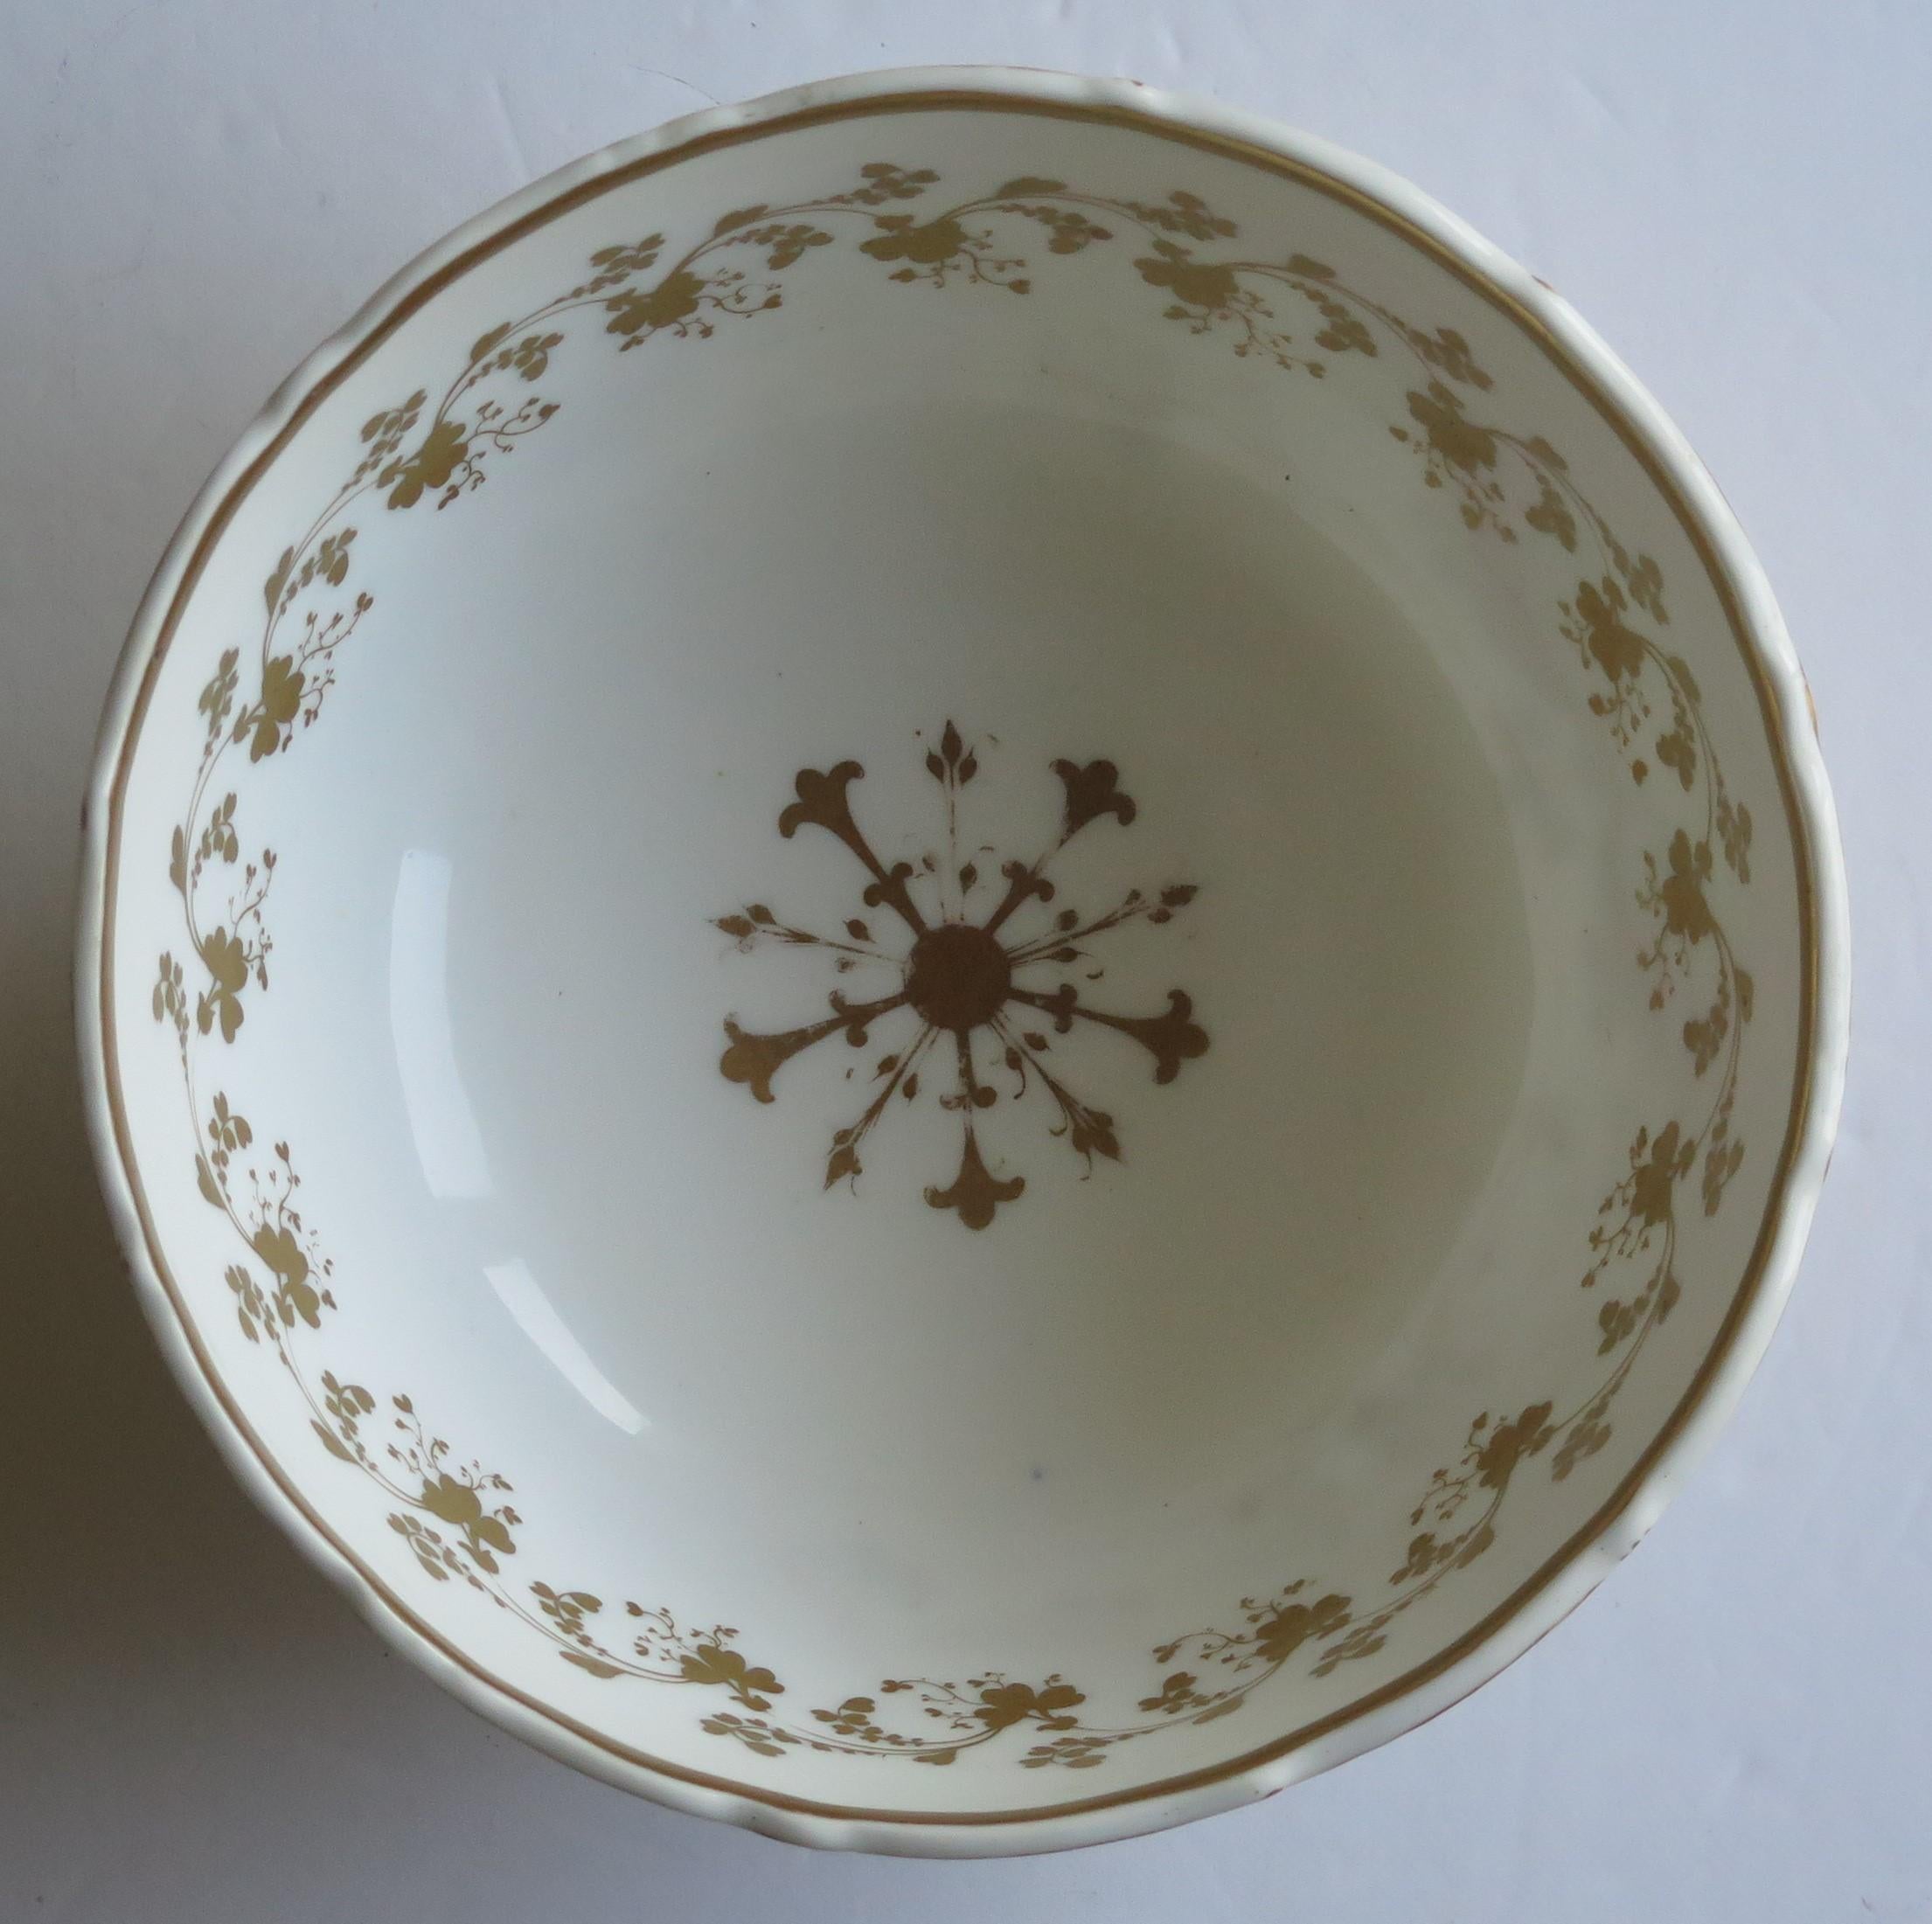 Regency Fine H & R Daniel Porcelain Slop Bowl in Recorded Pattern 4789, circa 1830